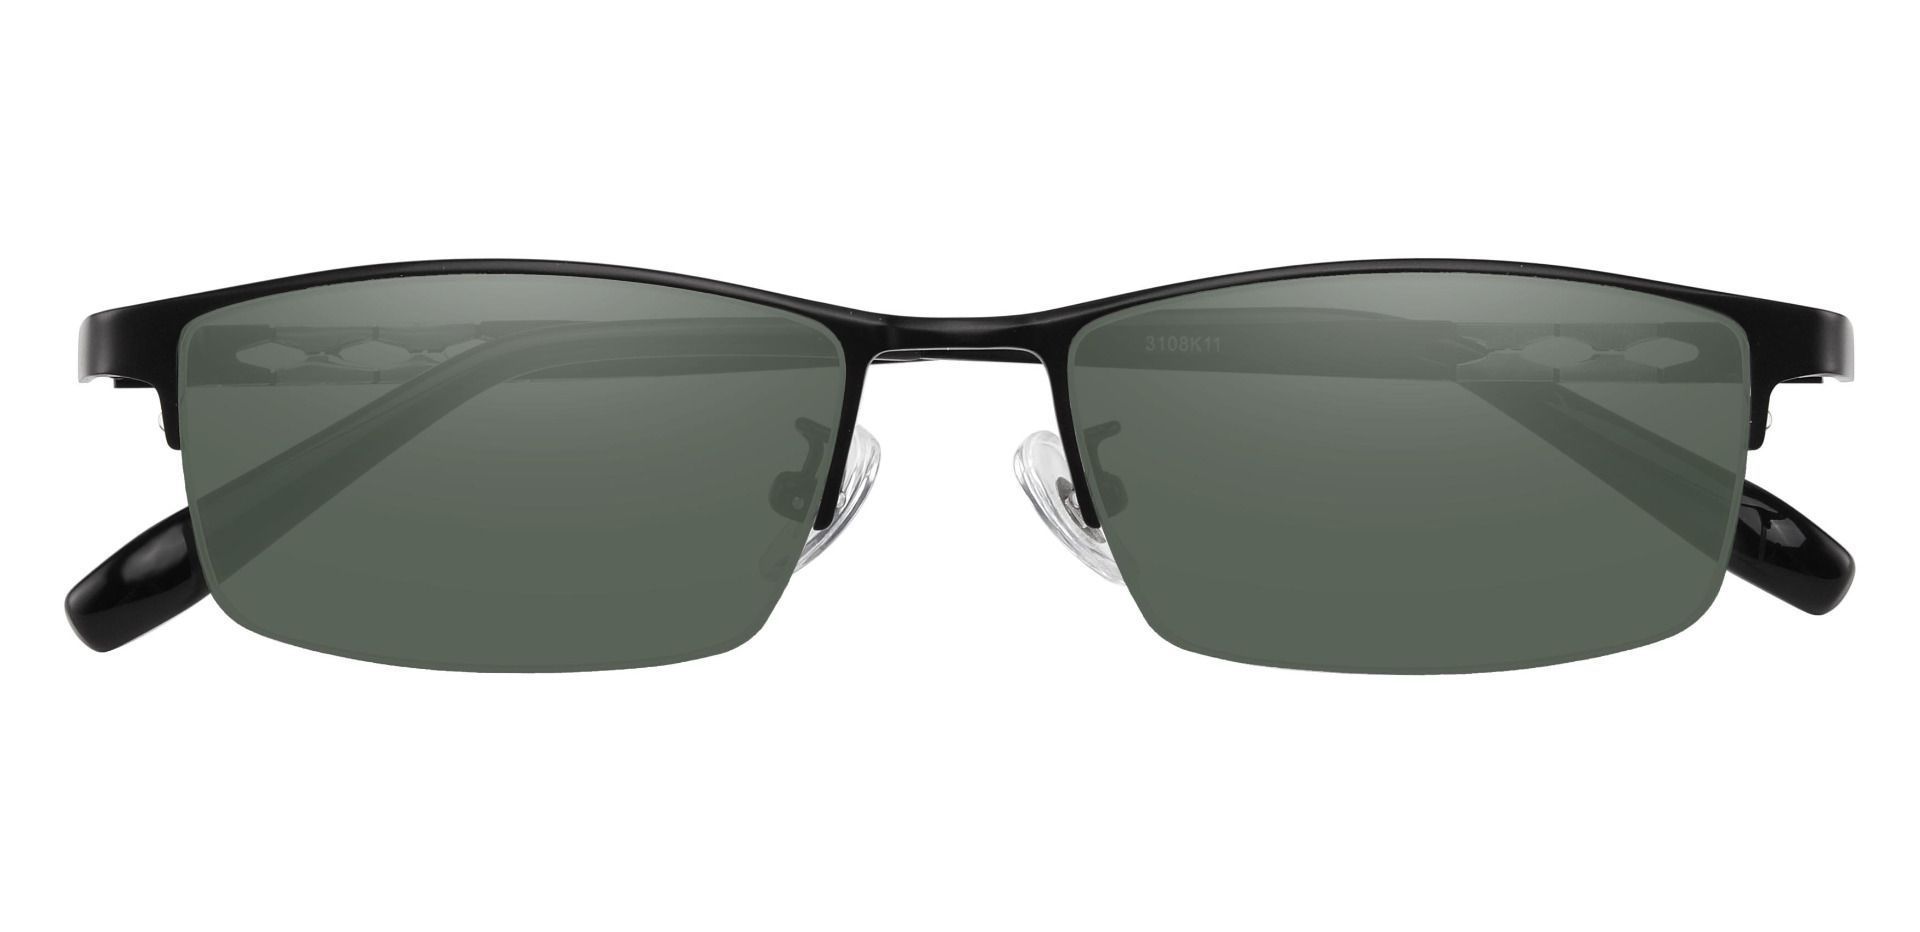 Burlington Rectangle Prescription Sunglasses - Black Frame With Green Lenses